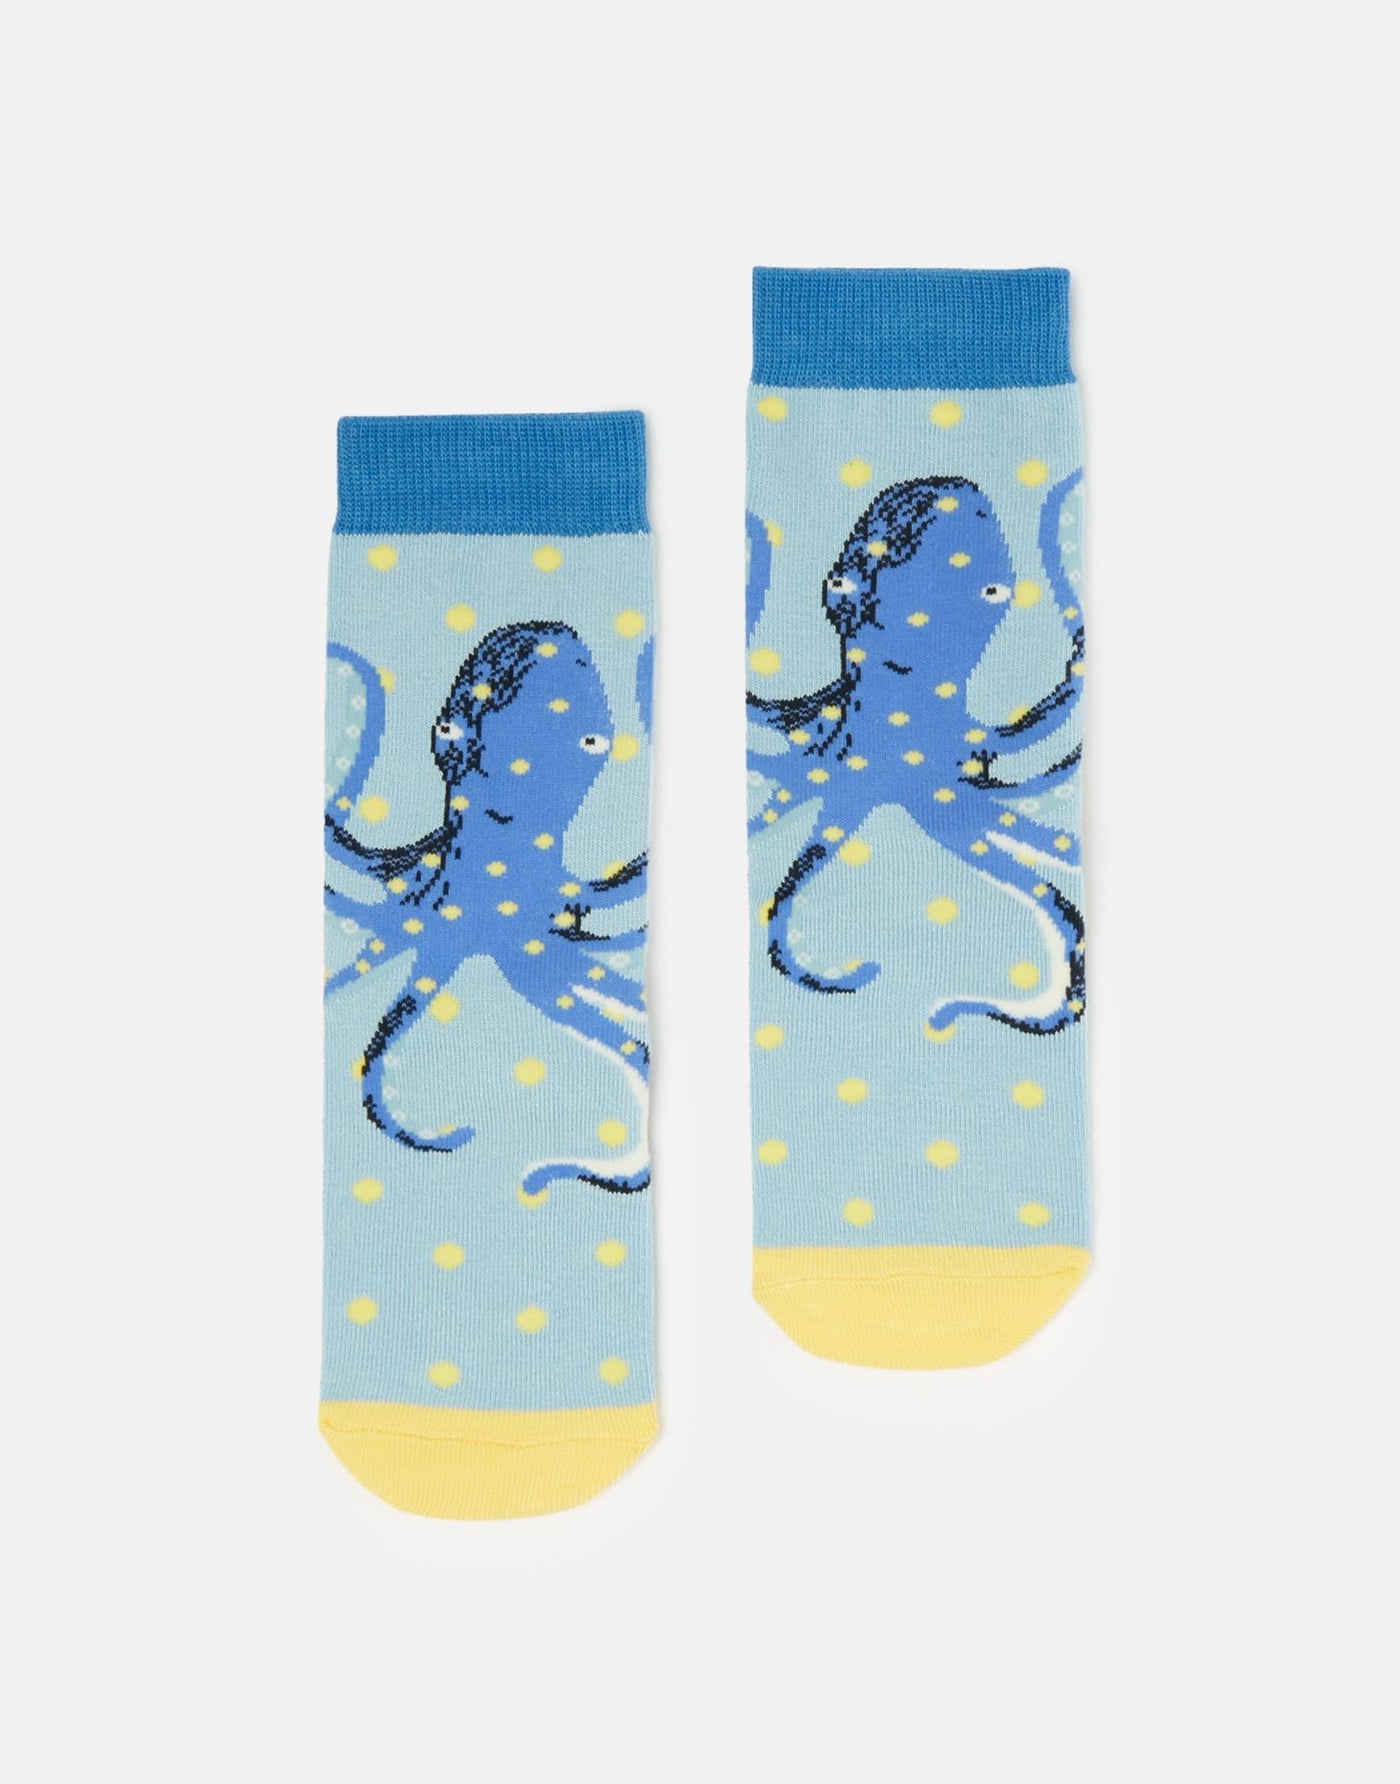 Eat Feet Octopus Socks